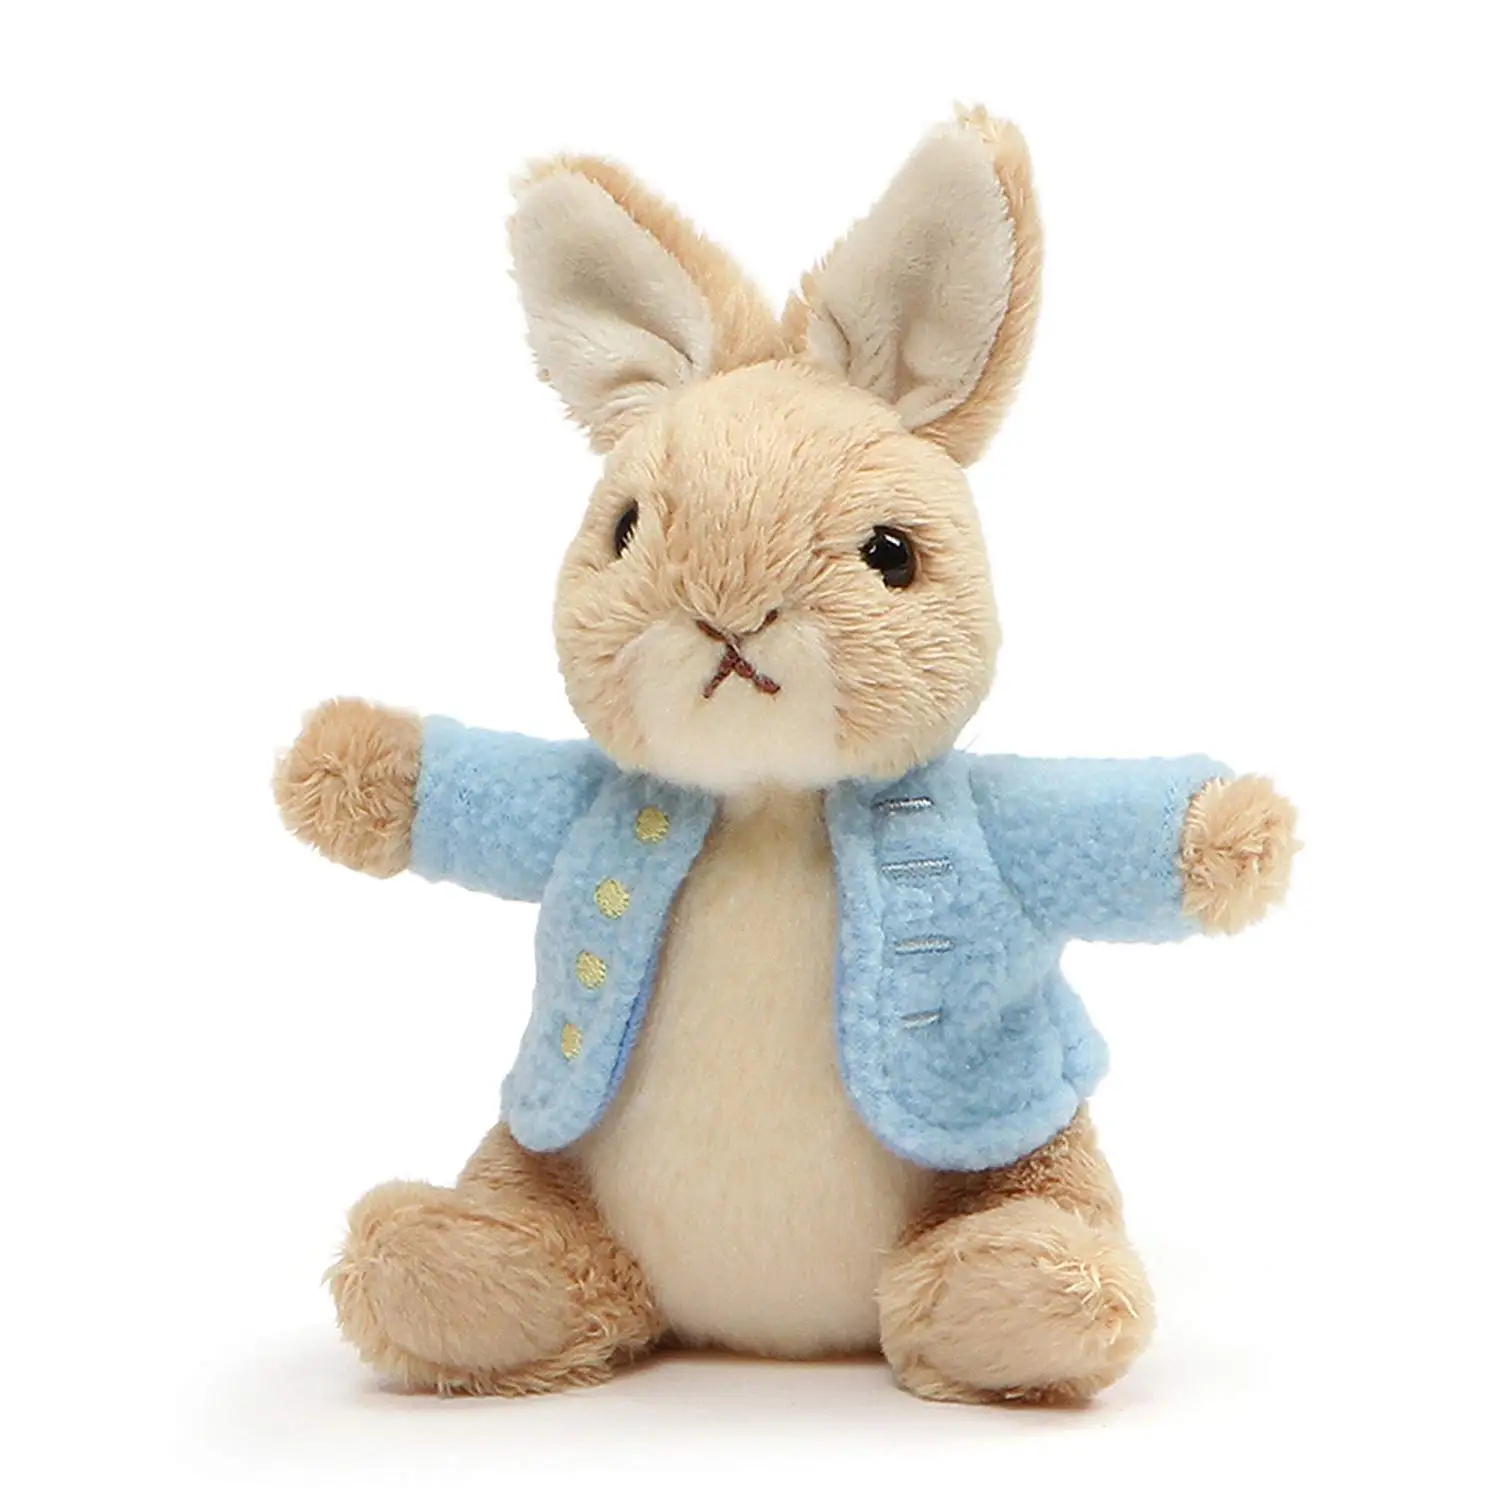 peter rabbit plush